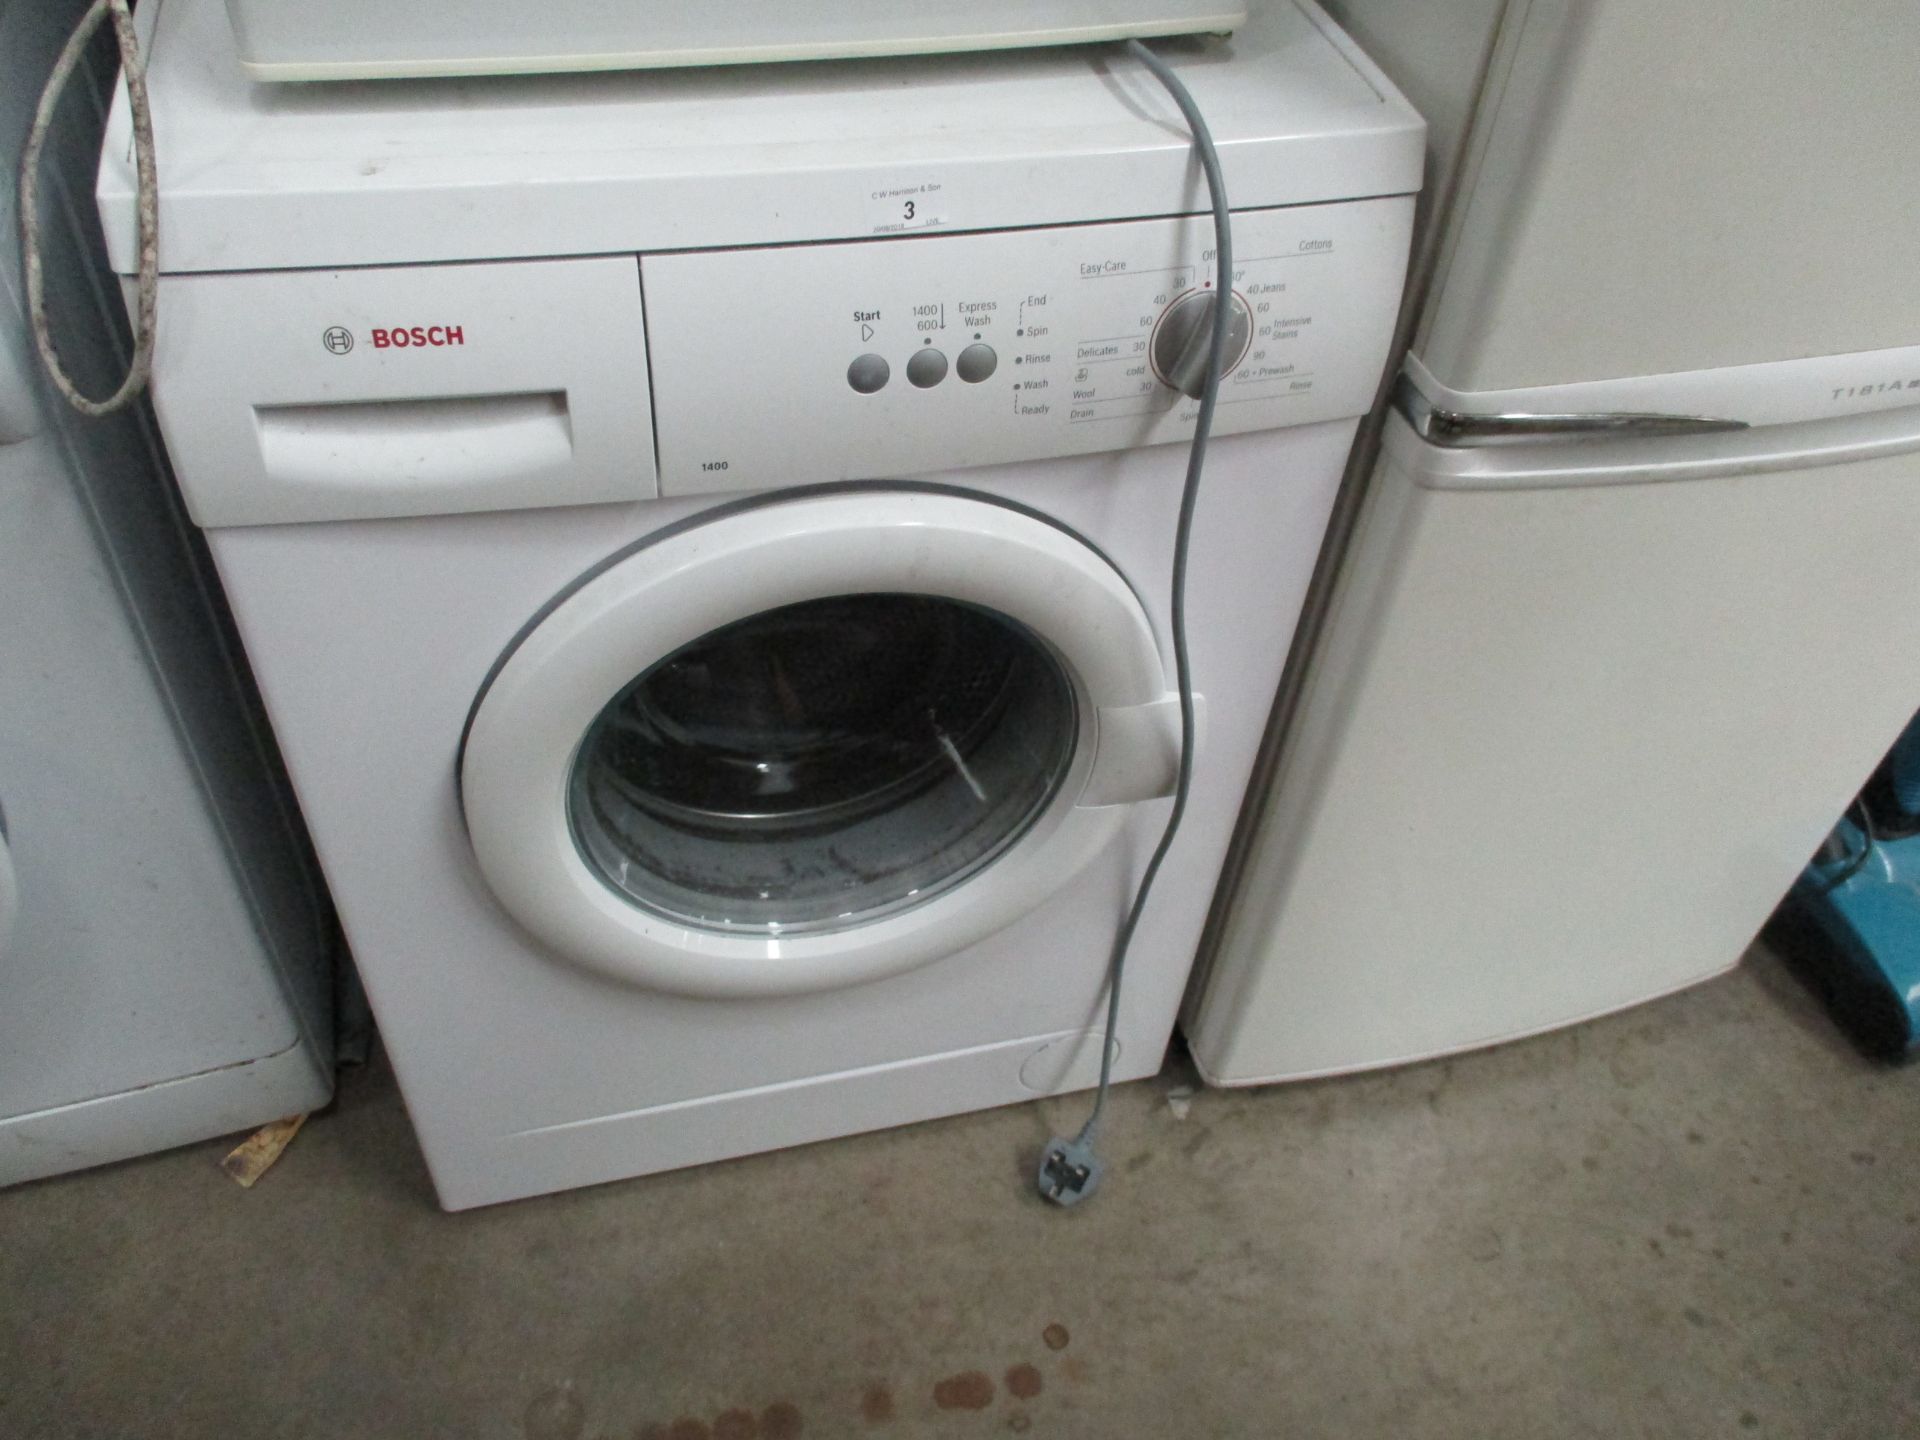 A Bosch 1400 washing machine